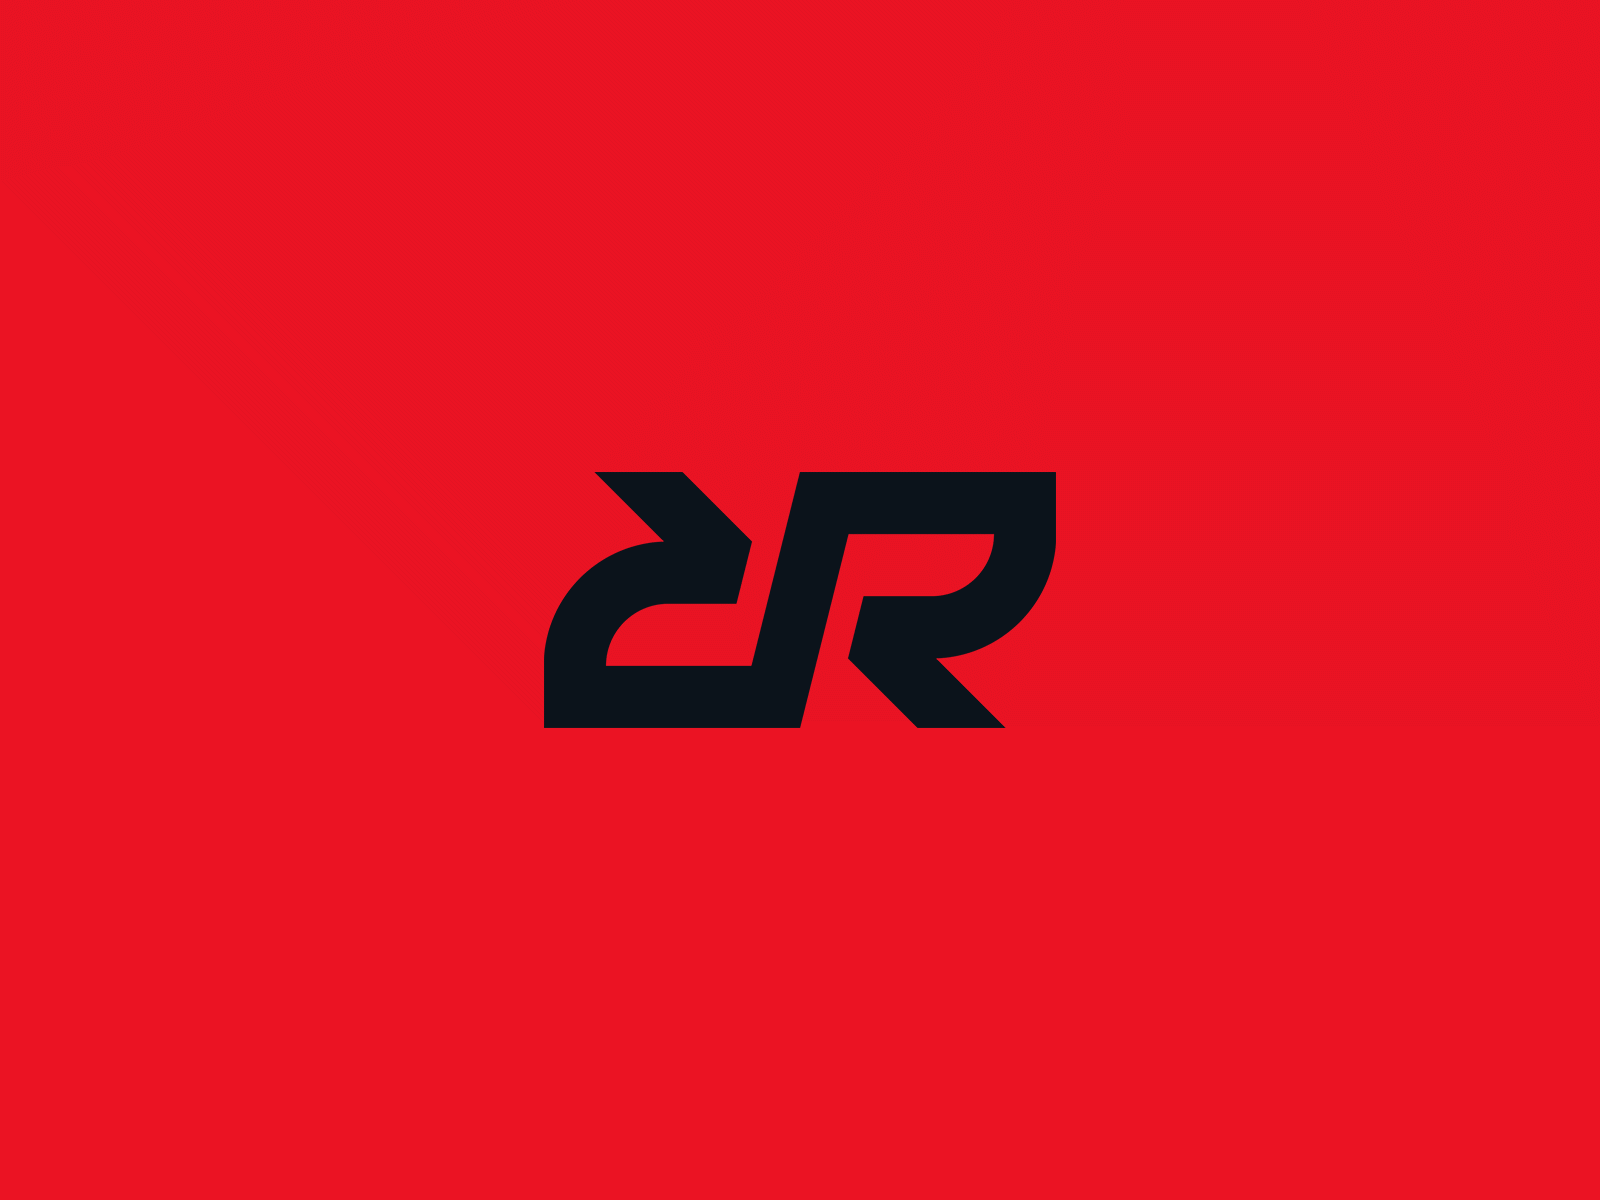 RR logo design